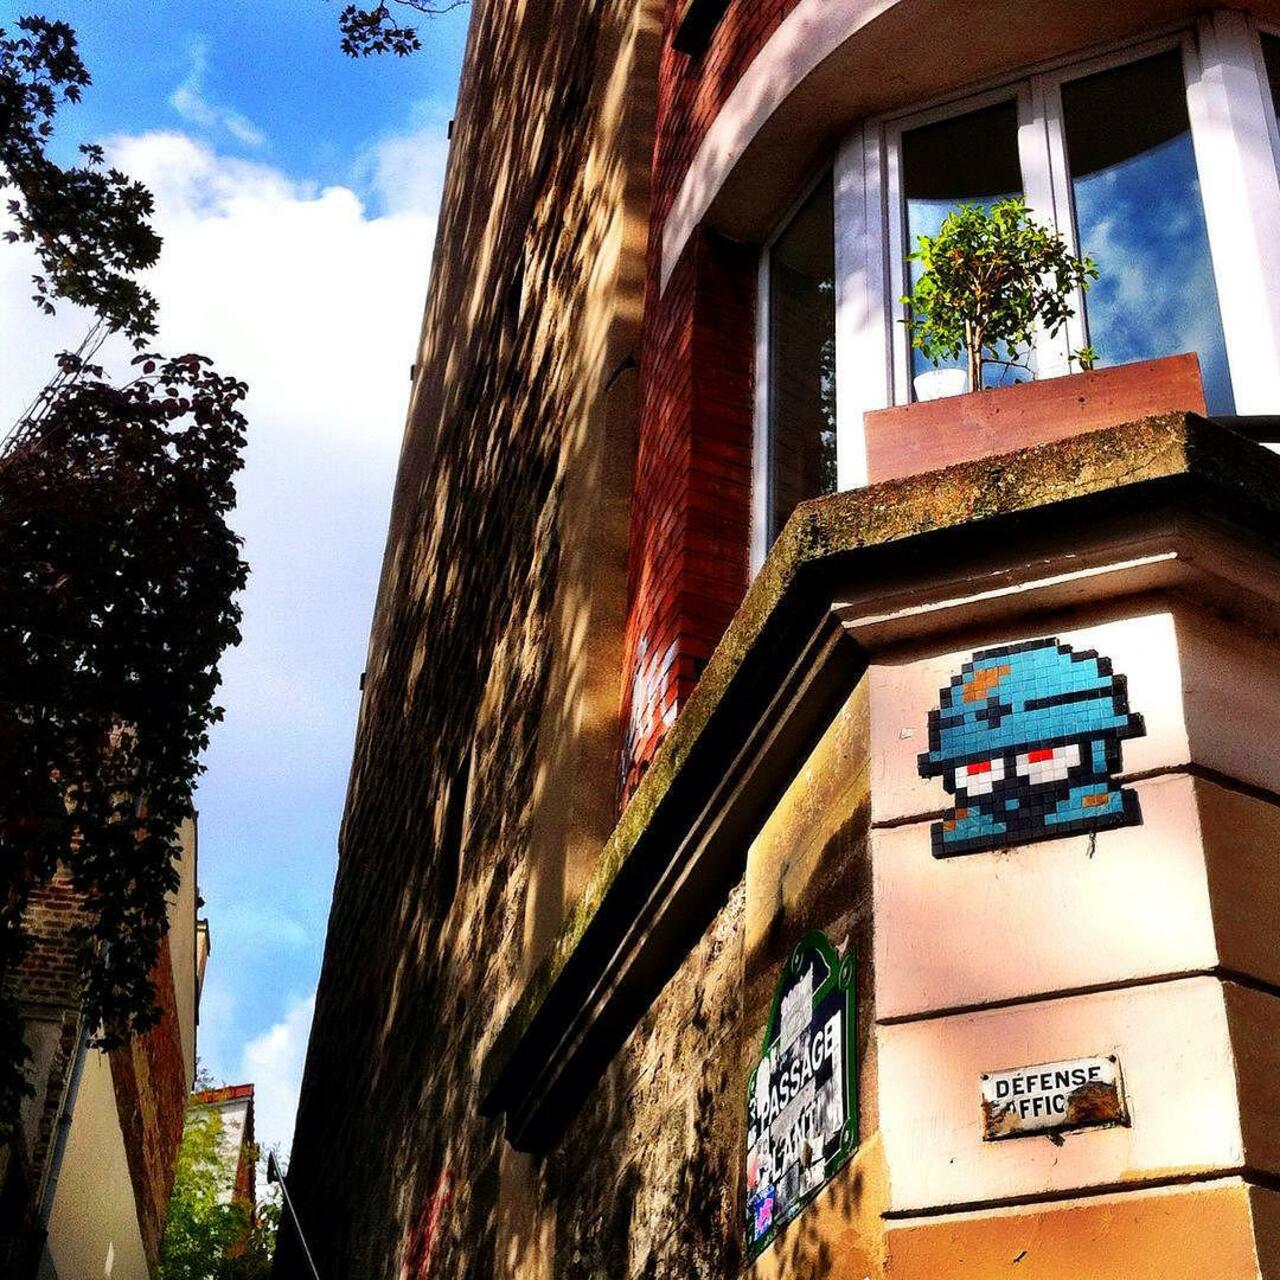 #Paris #graffiti photo by @noamzucker http://ift.tt/1NhAQVD #StreetArt http://t.co/sw4ga2CPqg